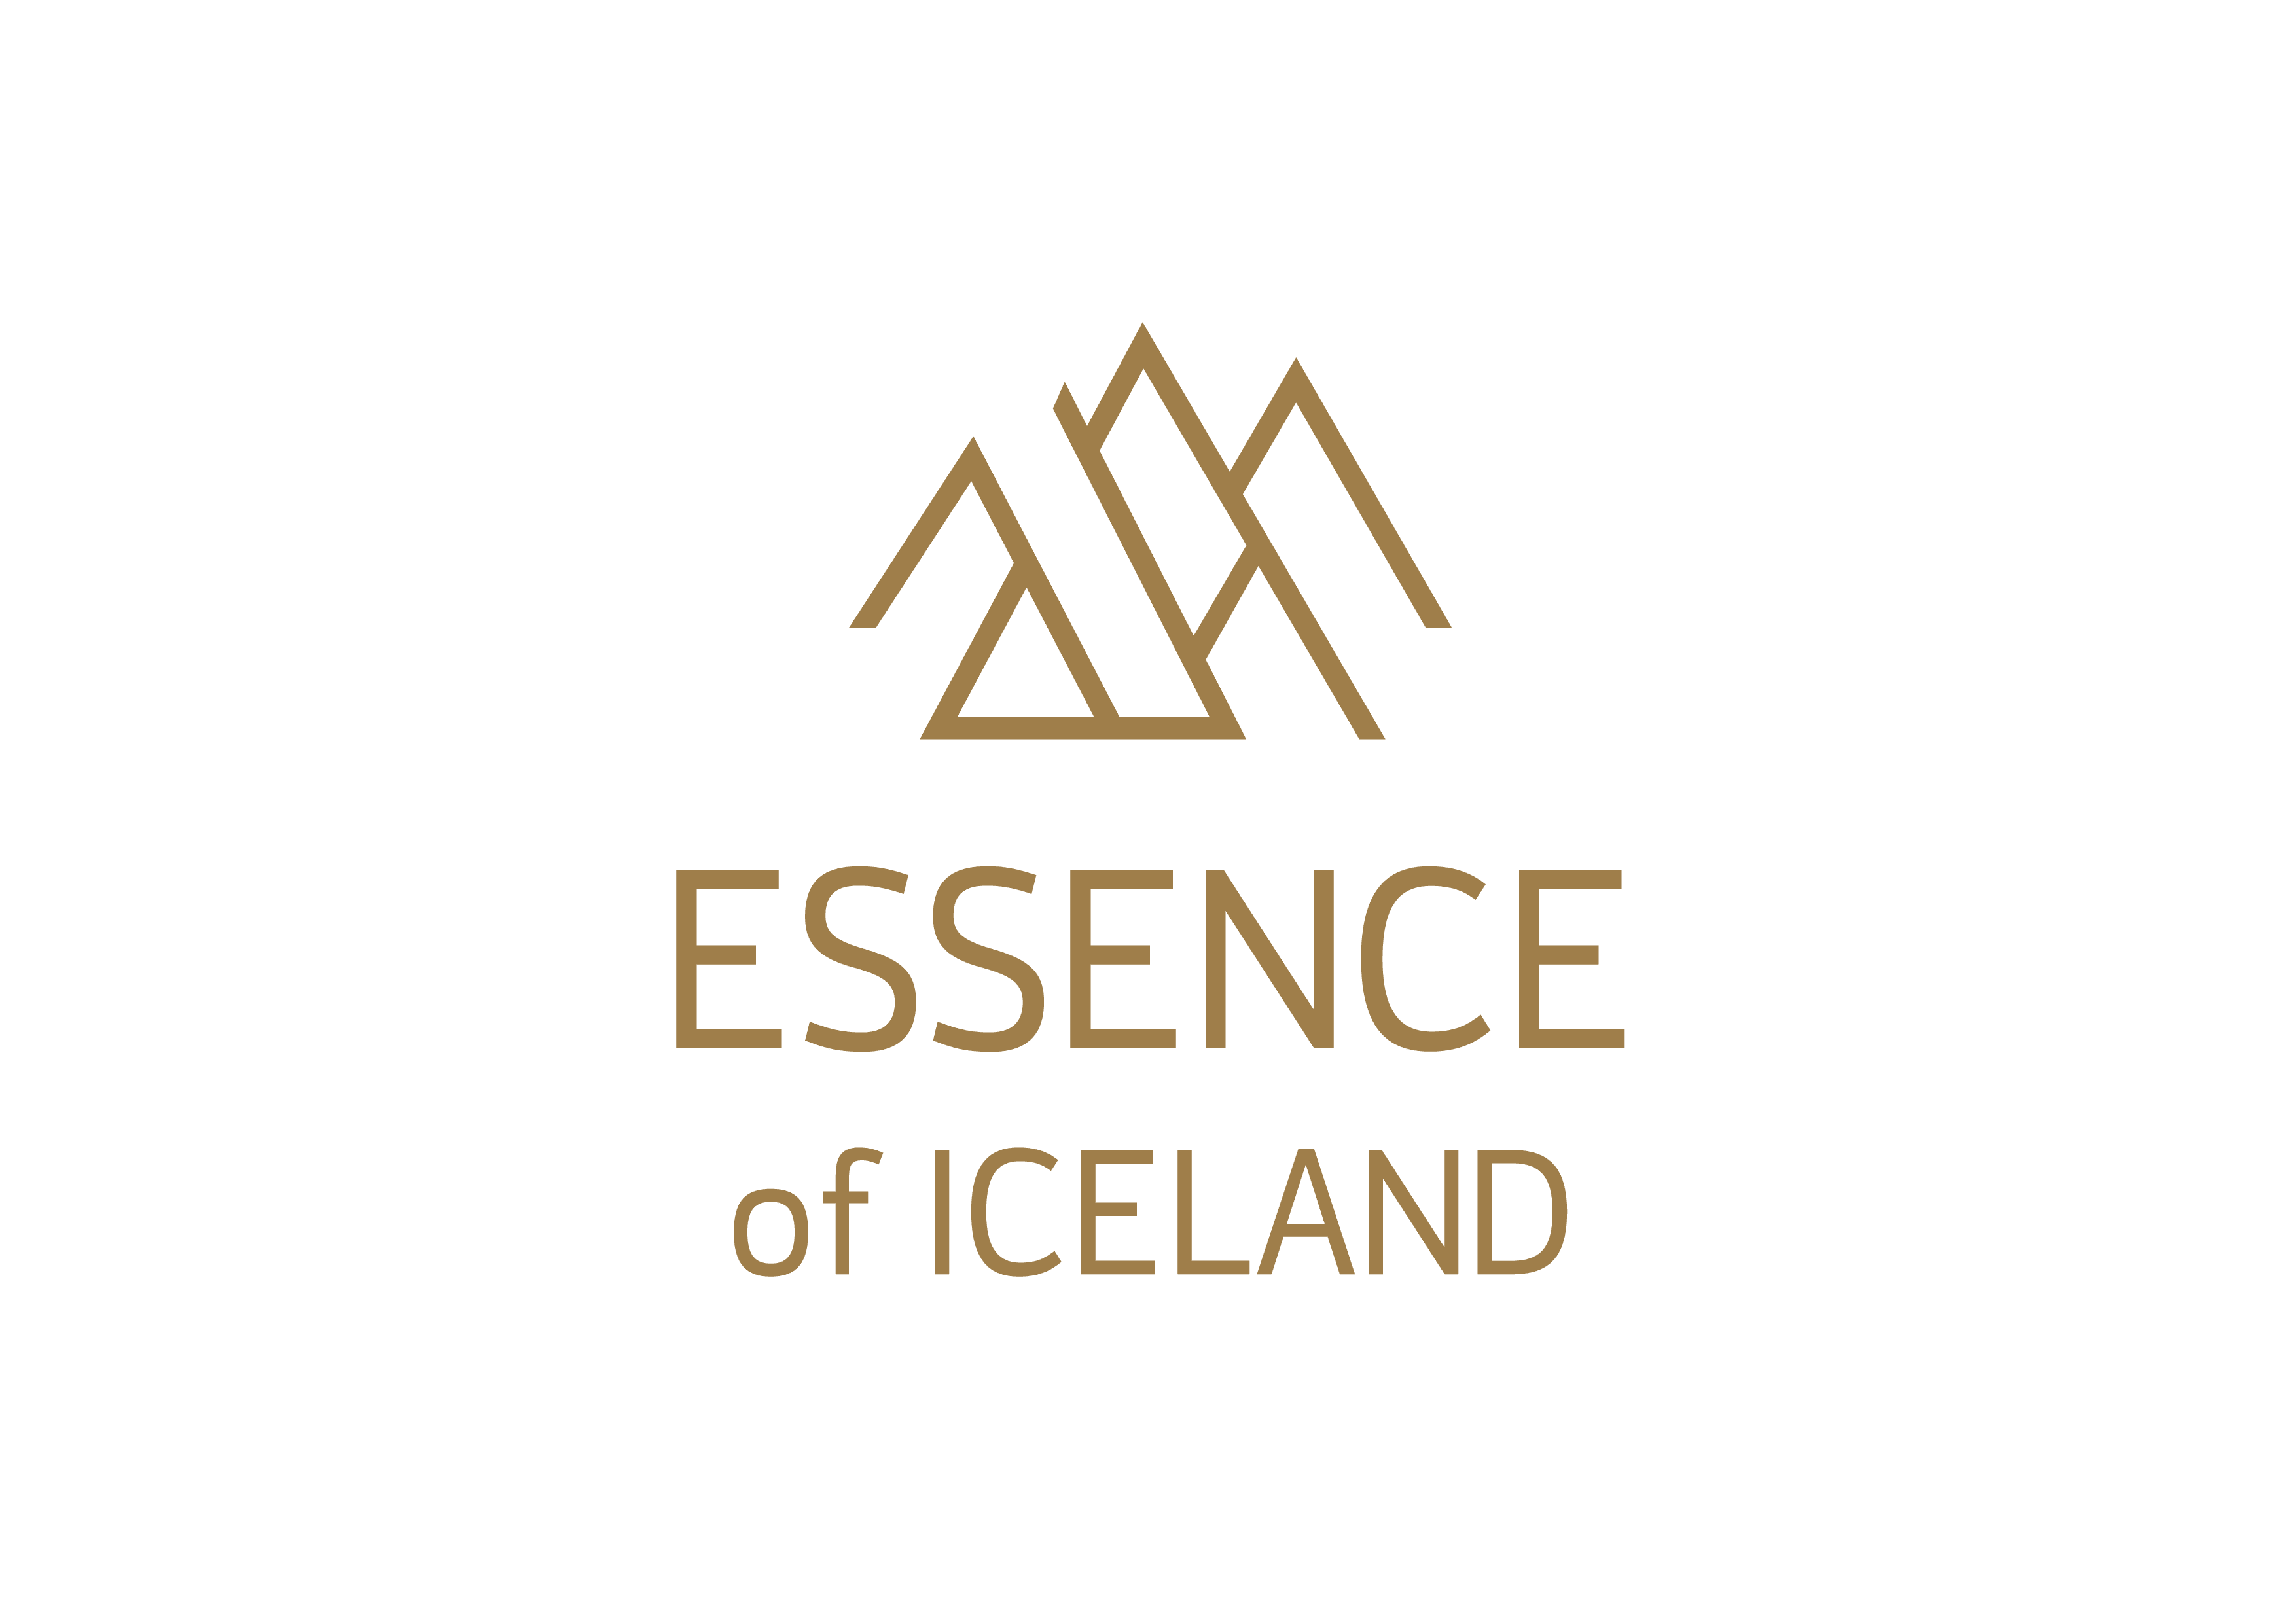 Iceland Logo - Essence of Iceland logo. Meet in Reykjavik